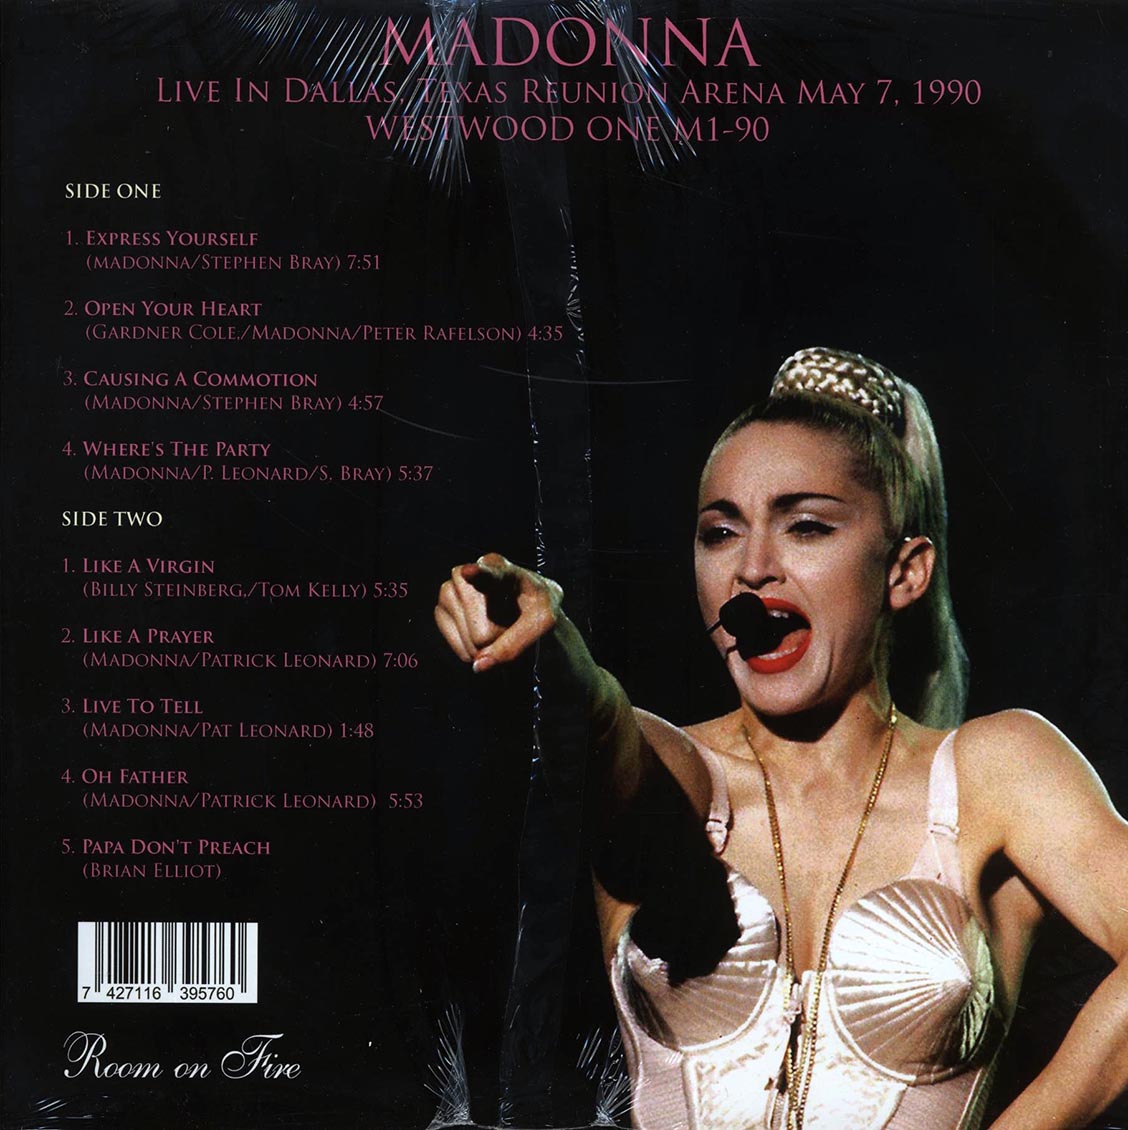 Madonna - Live In Dallas, Texas Reunion Arena May 7, 1990